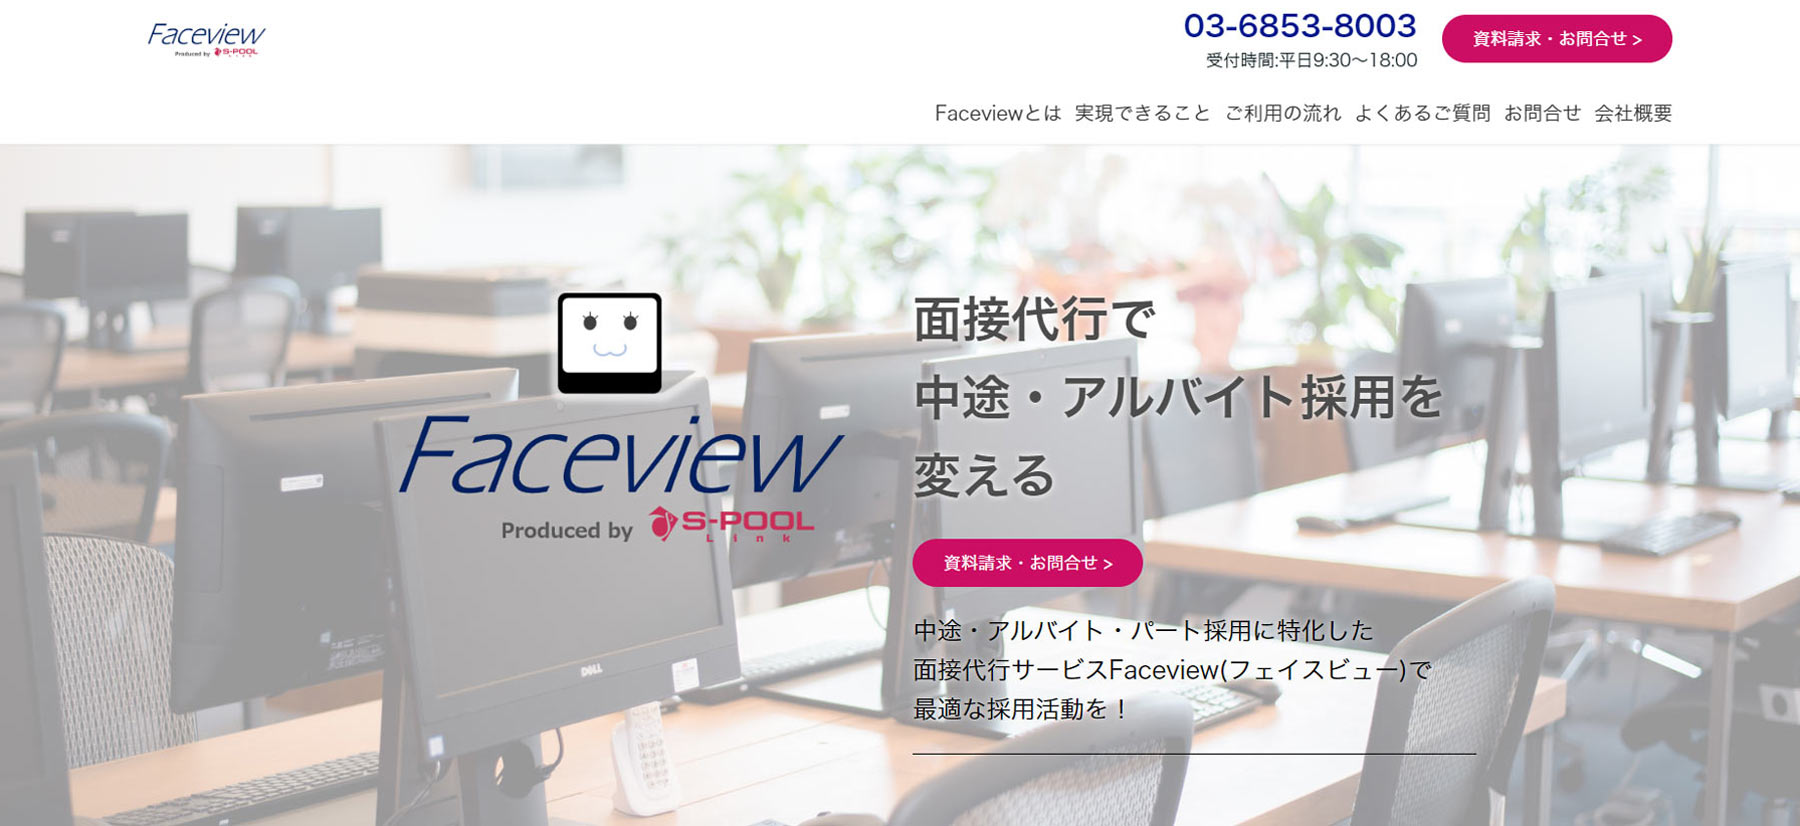 Faceview公式Webサイト